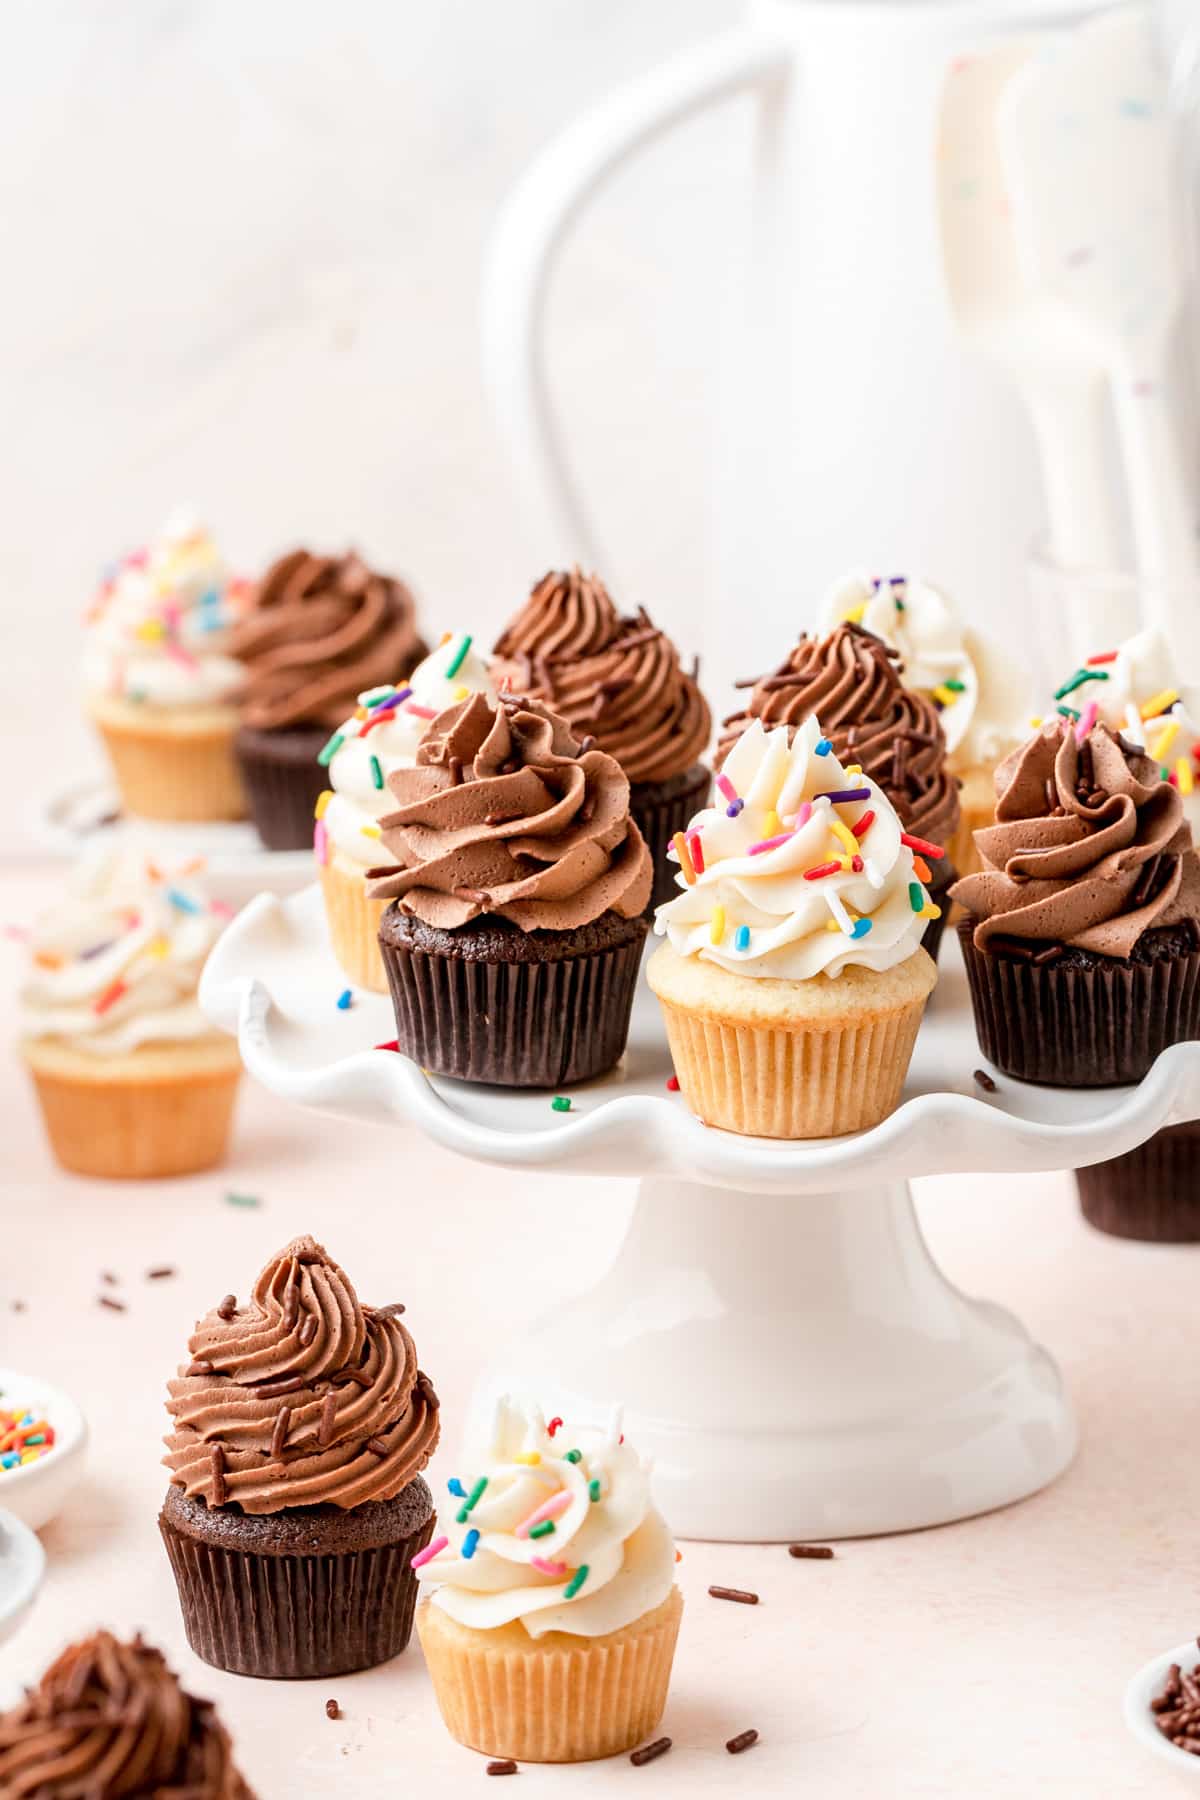 cake stand with mini cupcakes (both chocolate and vanilla).